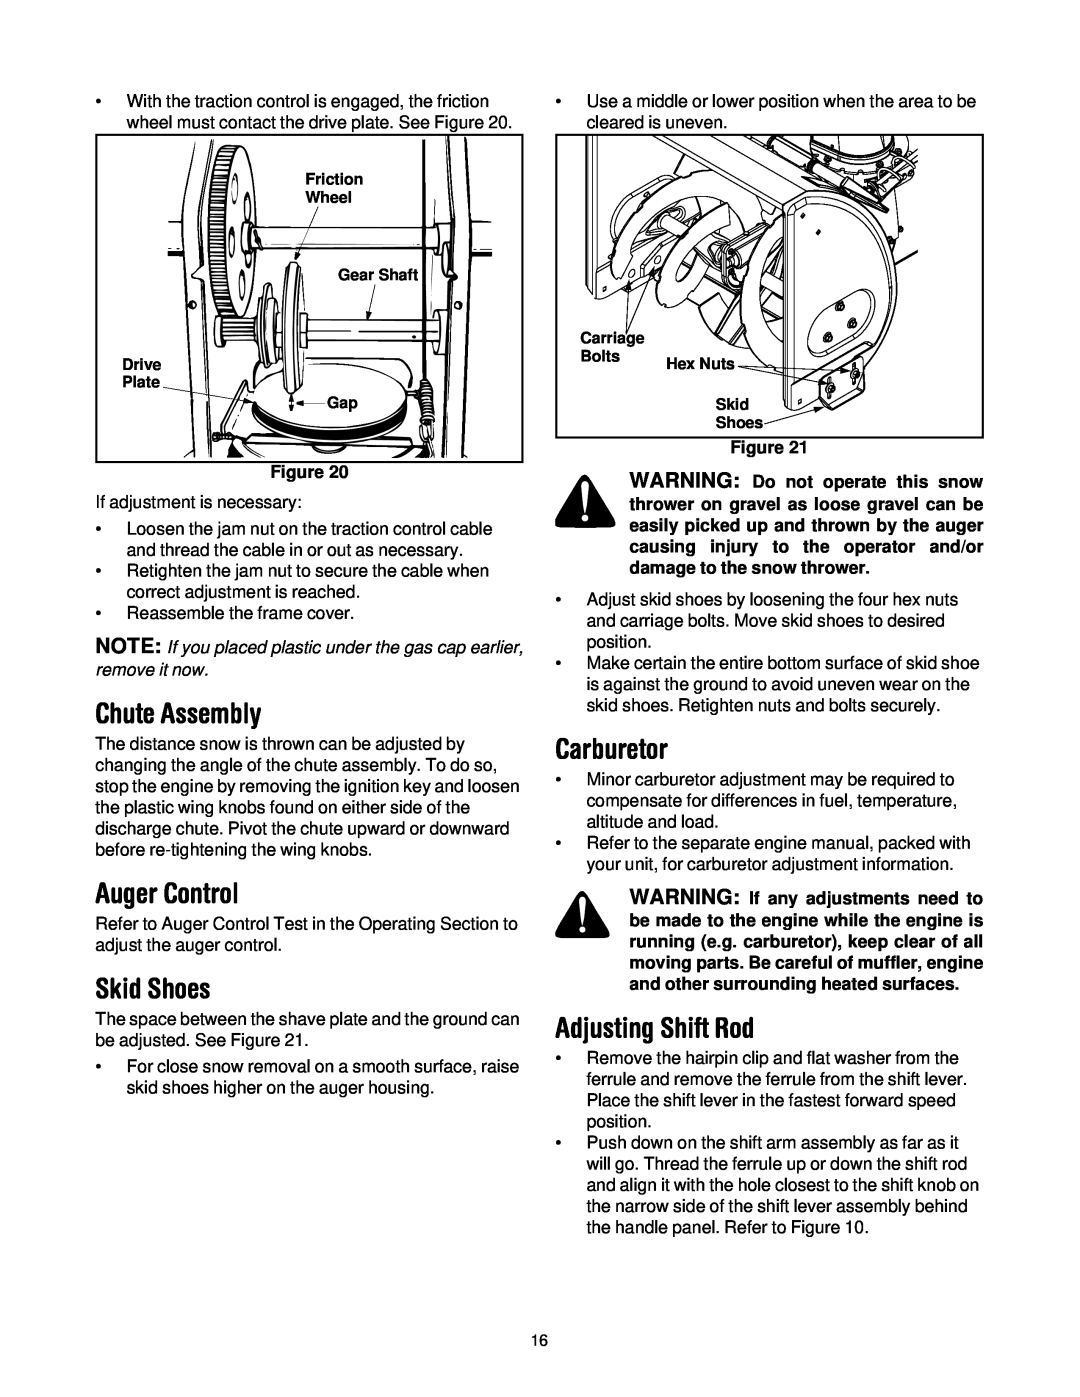 MTD 614E manual Chute Assembly, Auger Control, Skid Shoes, Carburetor, Adjusting Shift Rod 